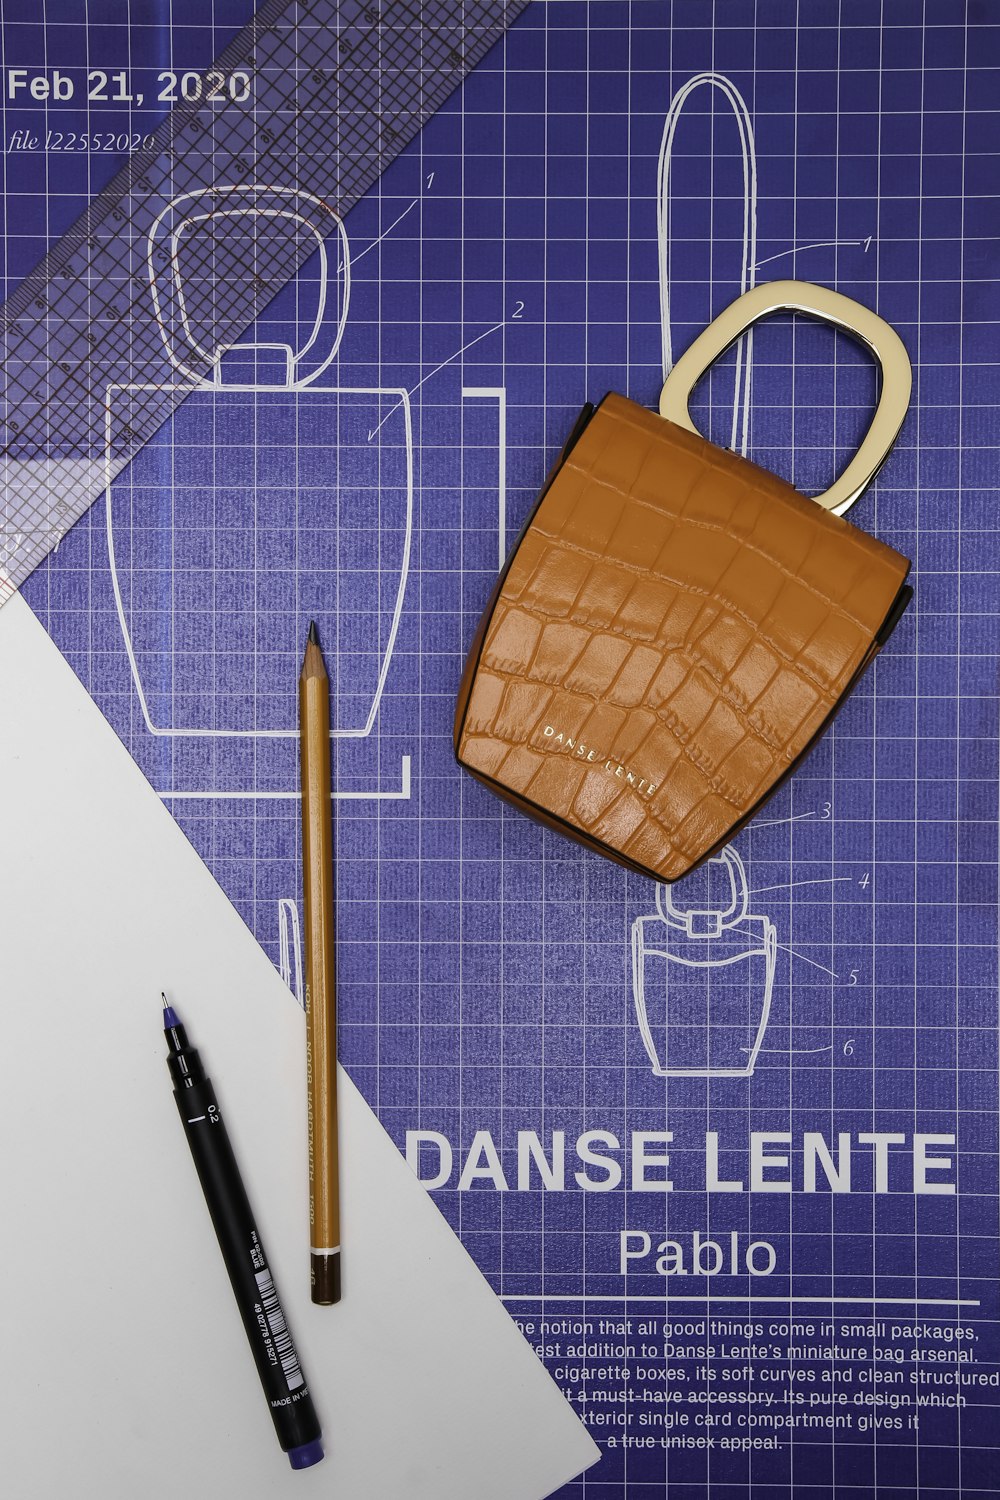 brown leather handbag beside black click pen